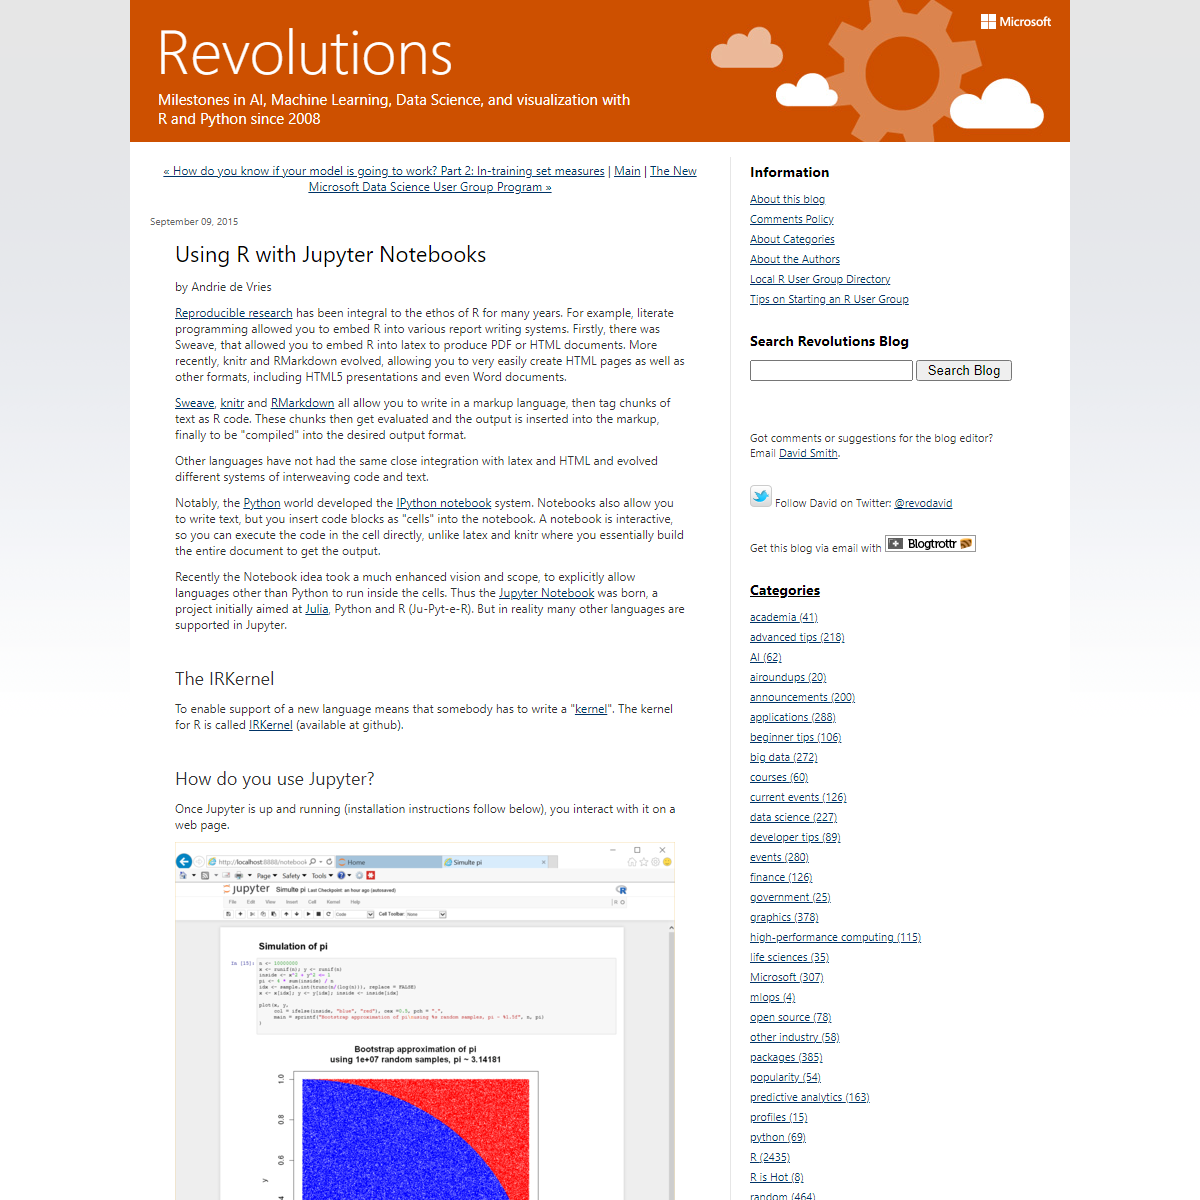 A complete backup of https://blog.revolutionanalytics.com/2015/09/using-r-with-jupyter-notebooks.html